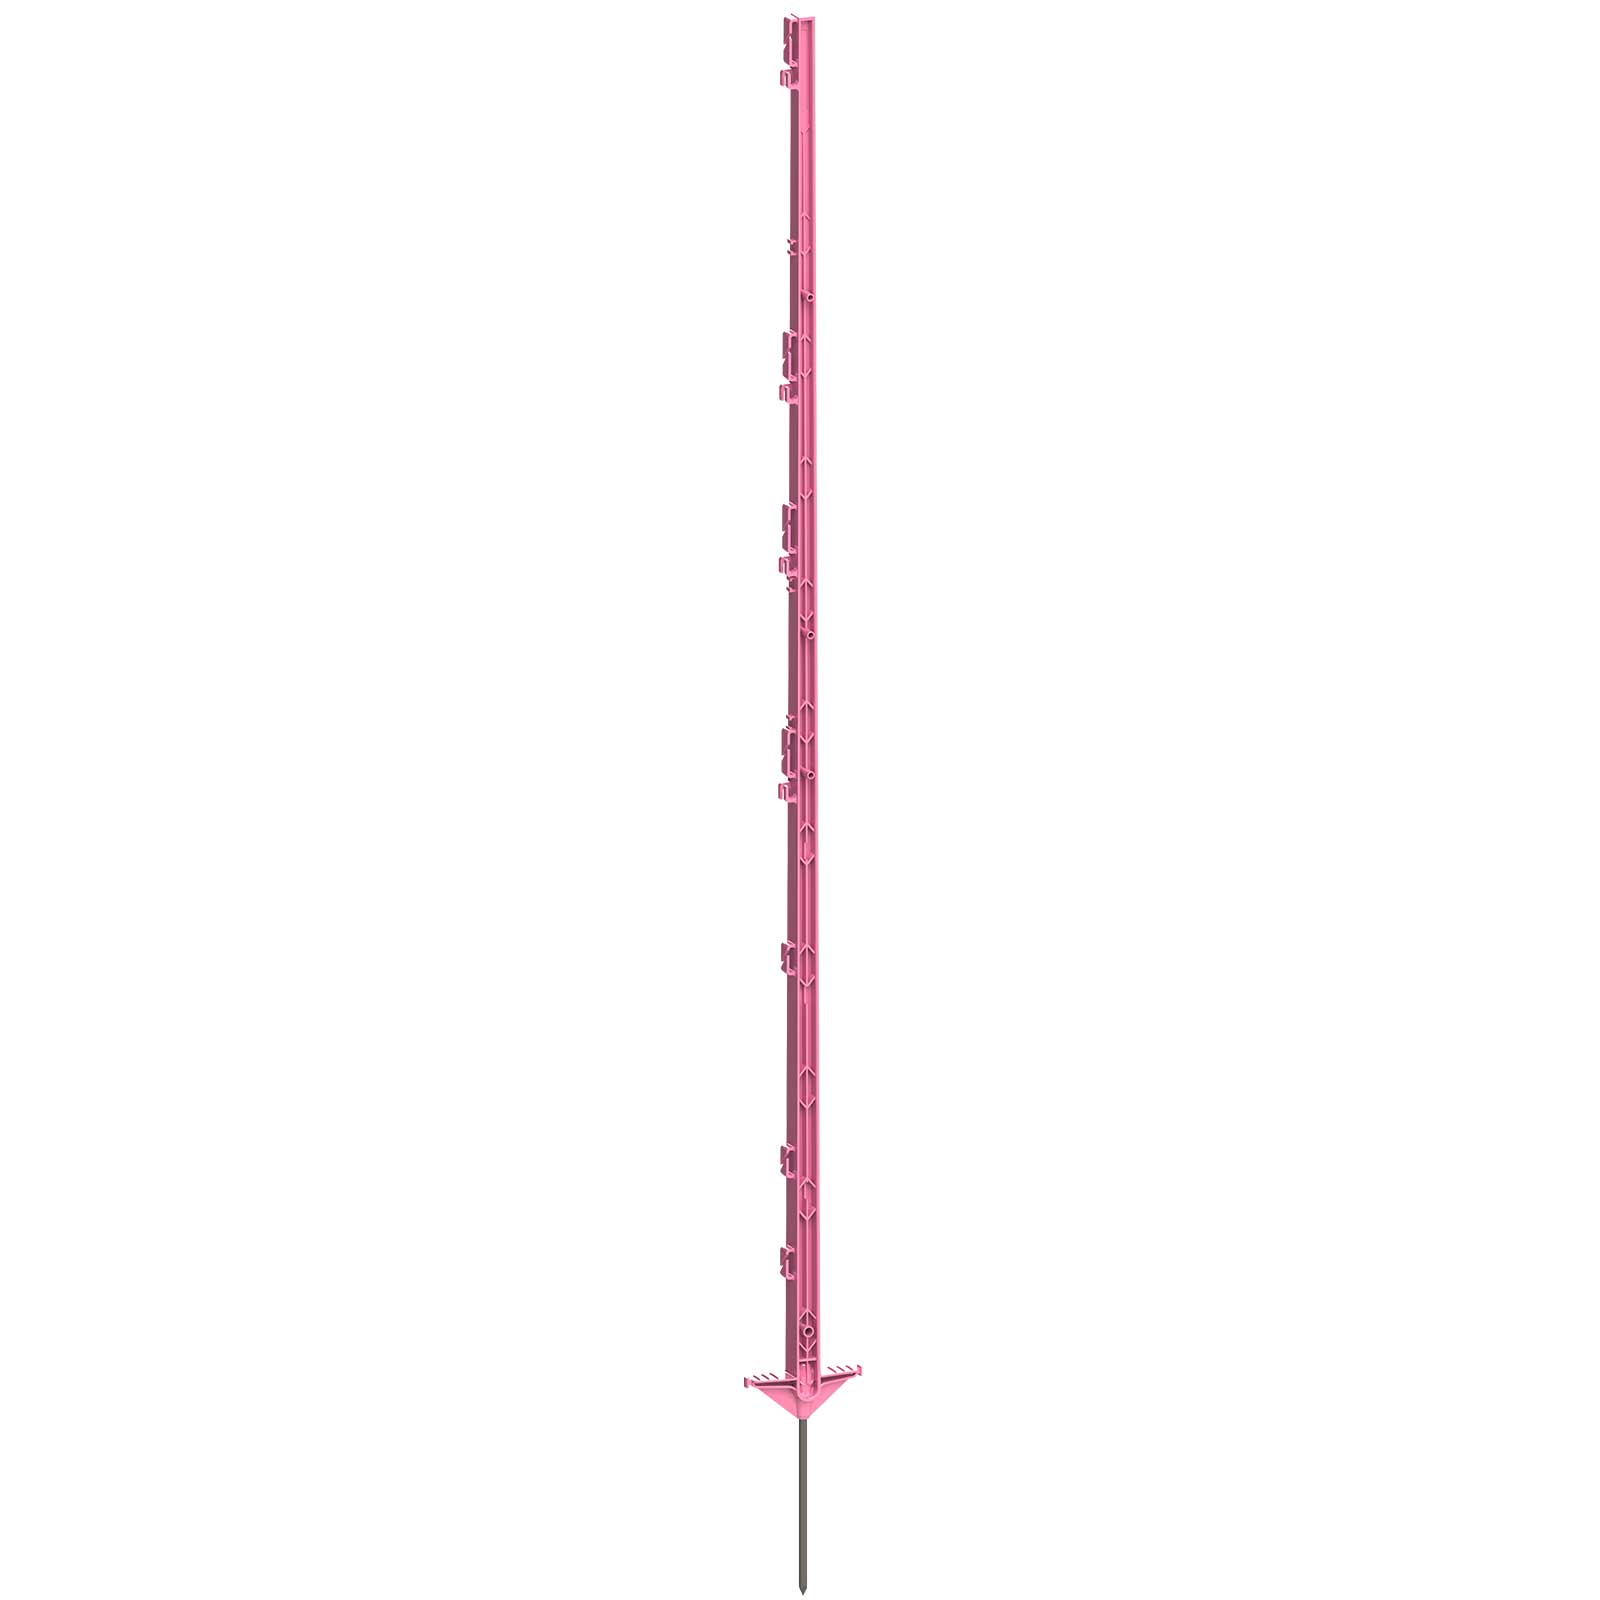 Műanyag villanypásztor karó Expert 156 cm, dupla taposó, pink (5 darab)